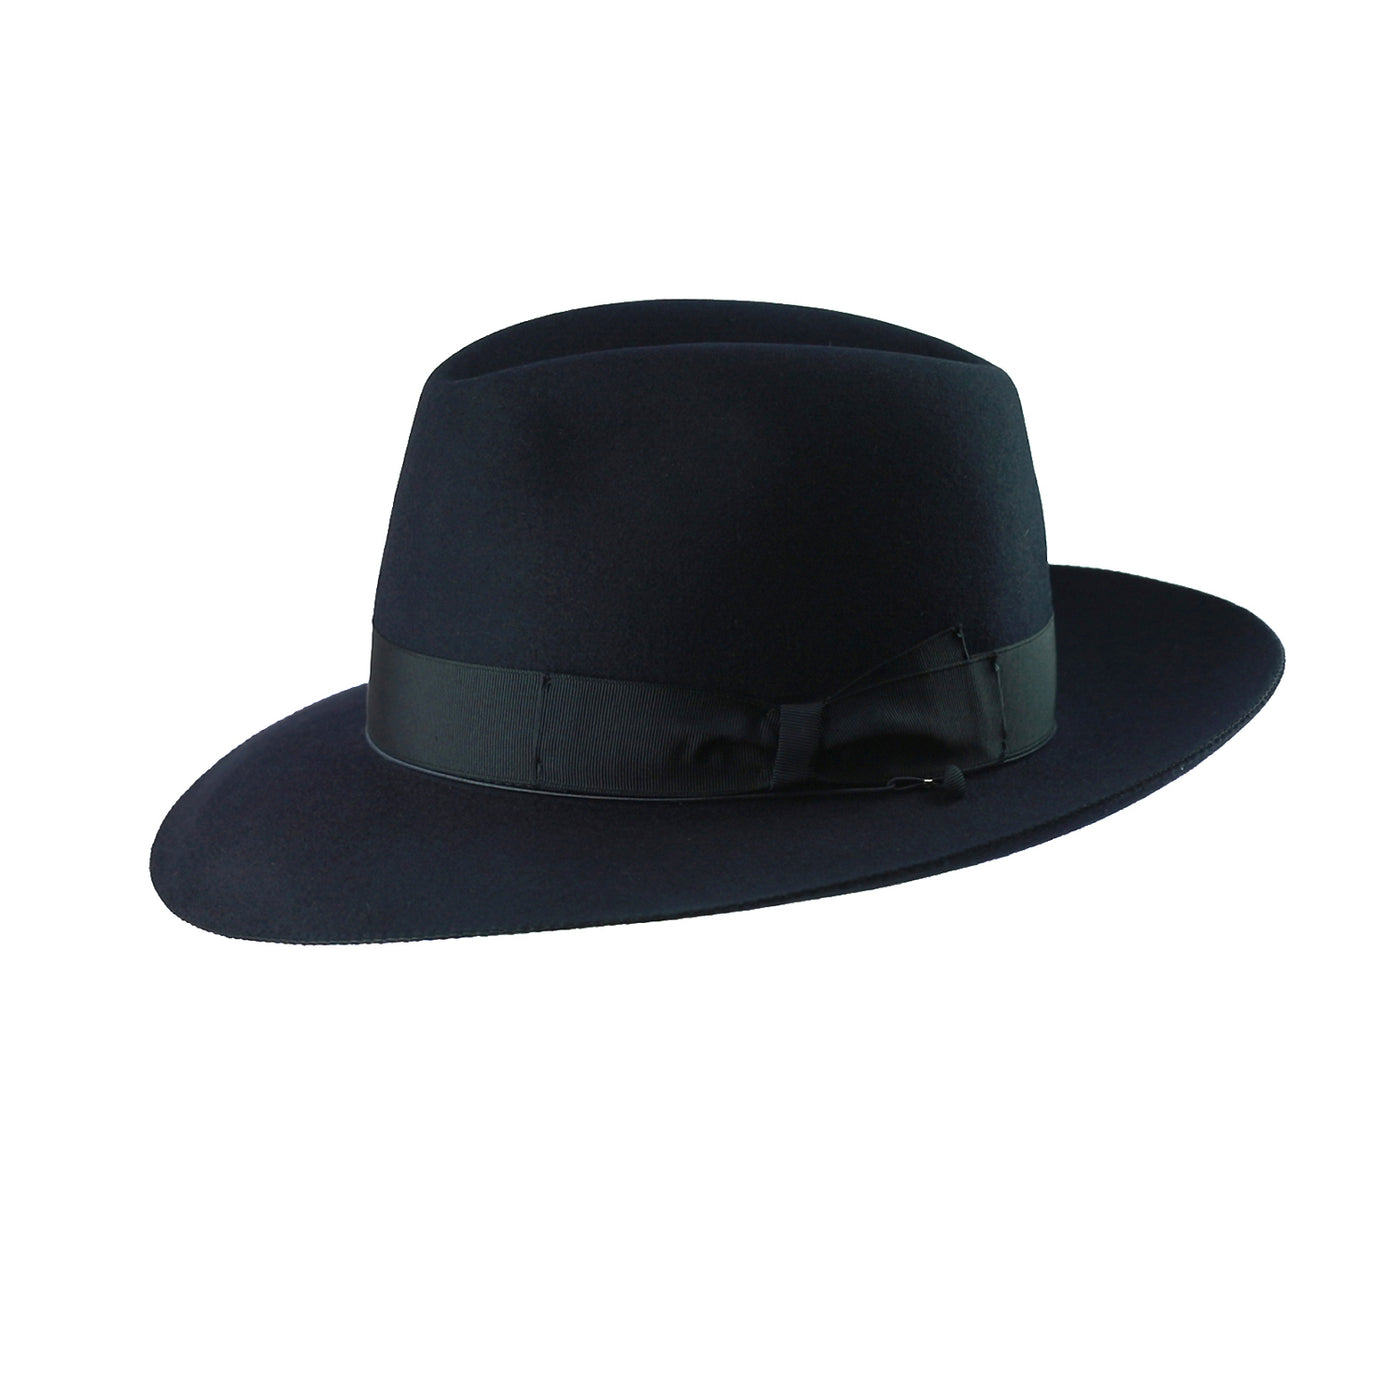 Mattoni 300 - Navy, product_type] - Borsalino for Atica fedora hat